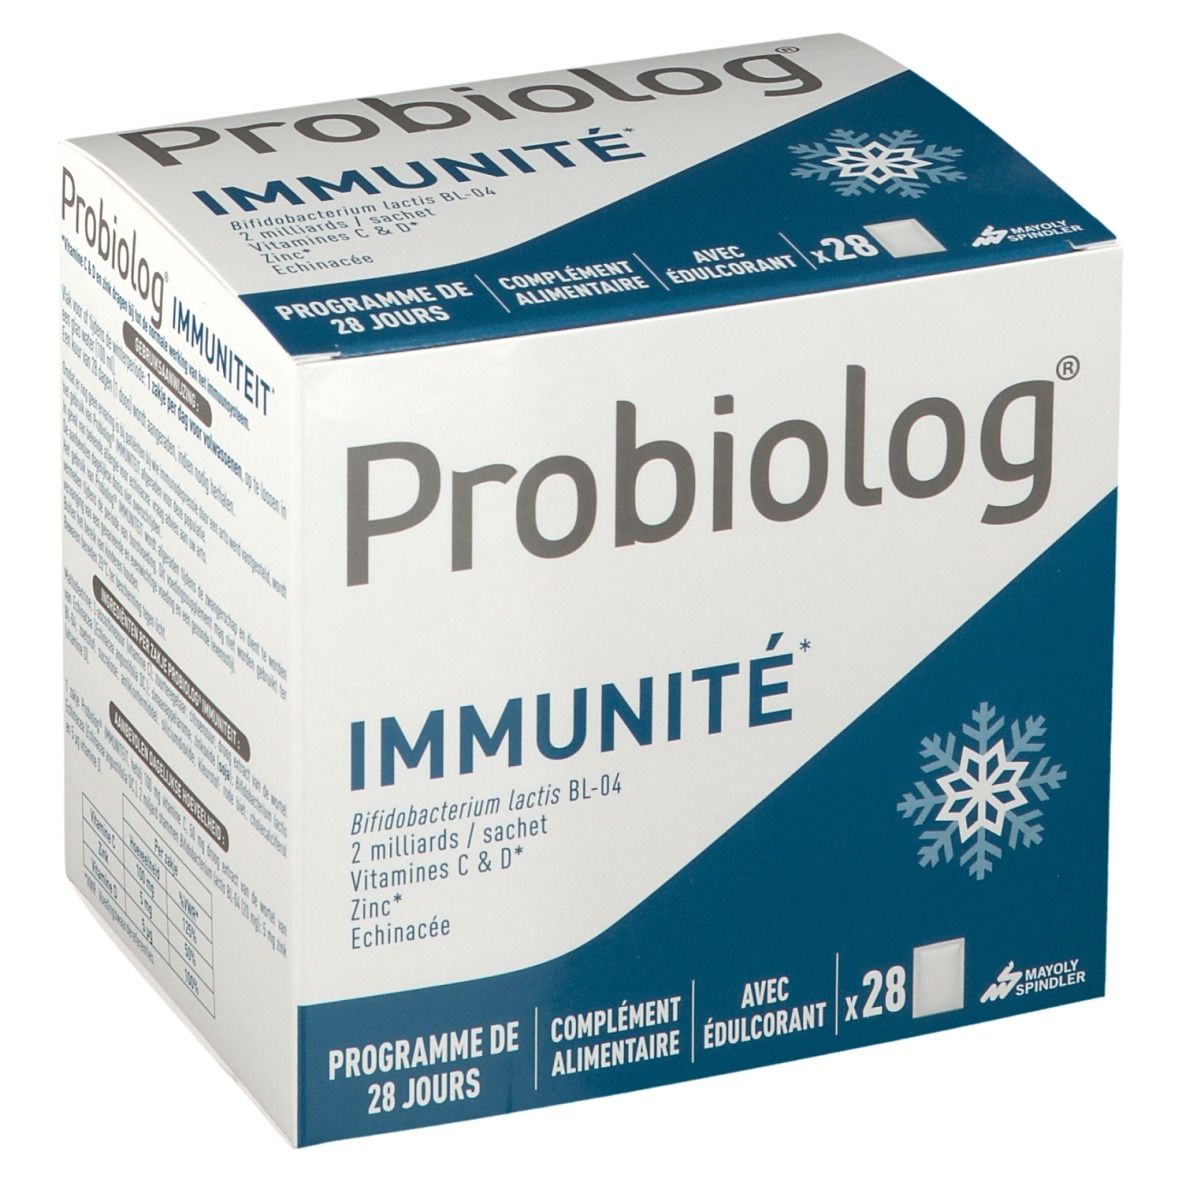 Probiolog® Immunité